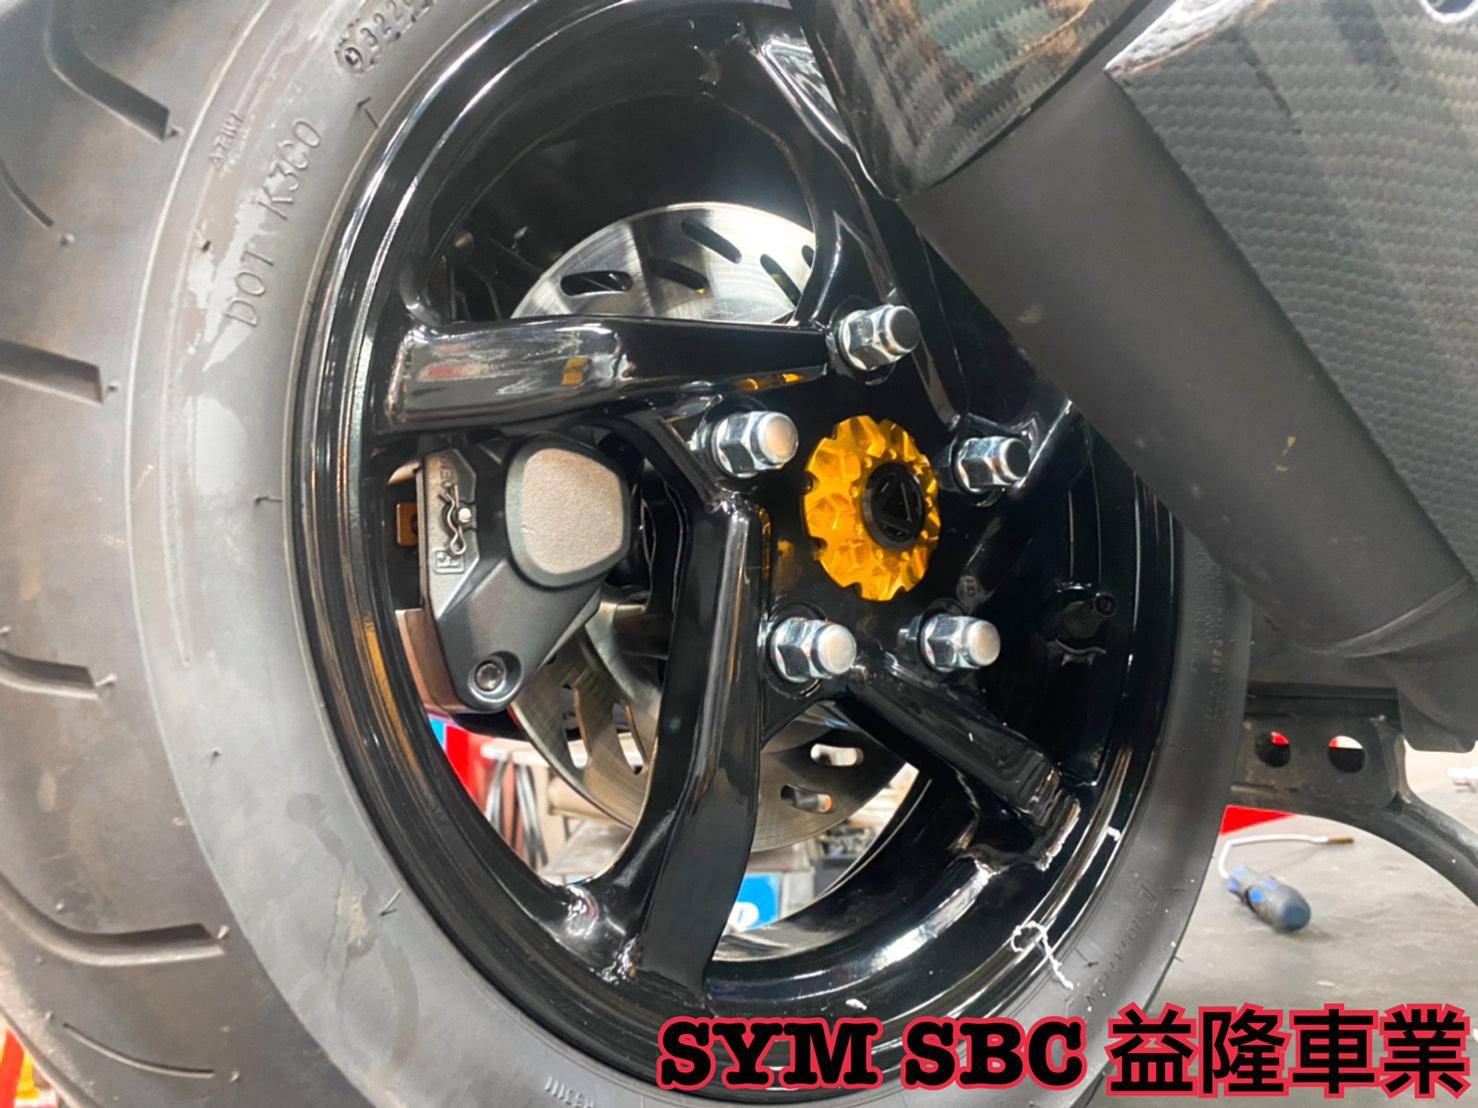 SYM DRG 158 安裝 JapanSpeed 造型後輪芯蓋 *SYM SBC 益隆車業*